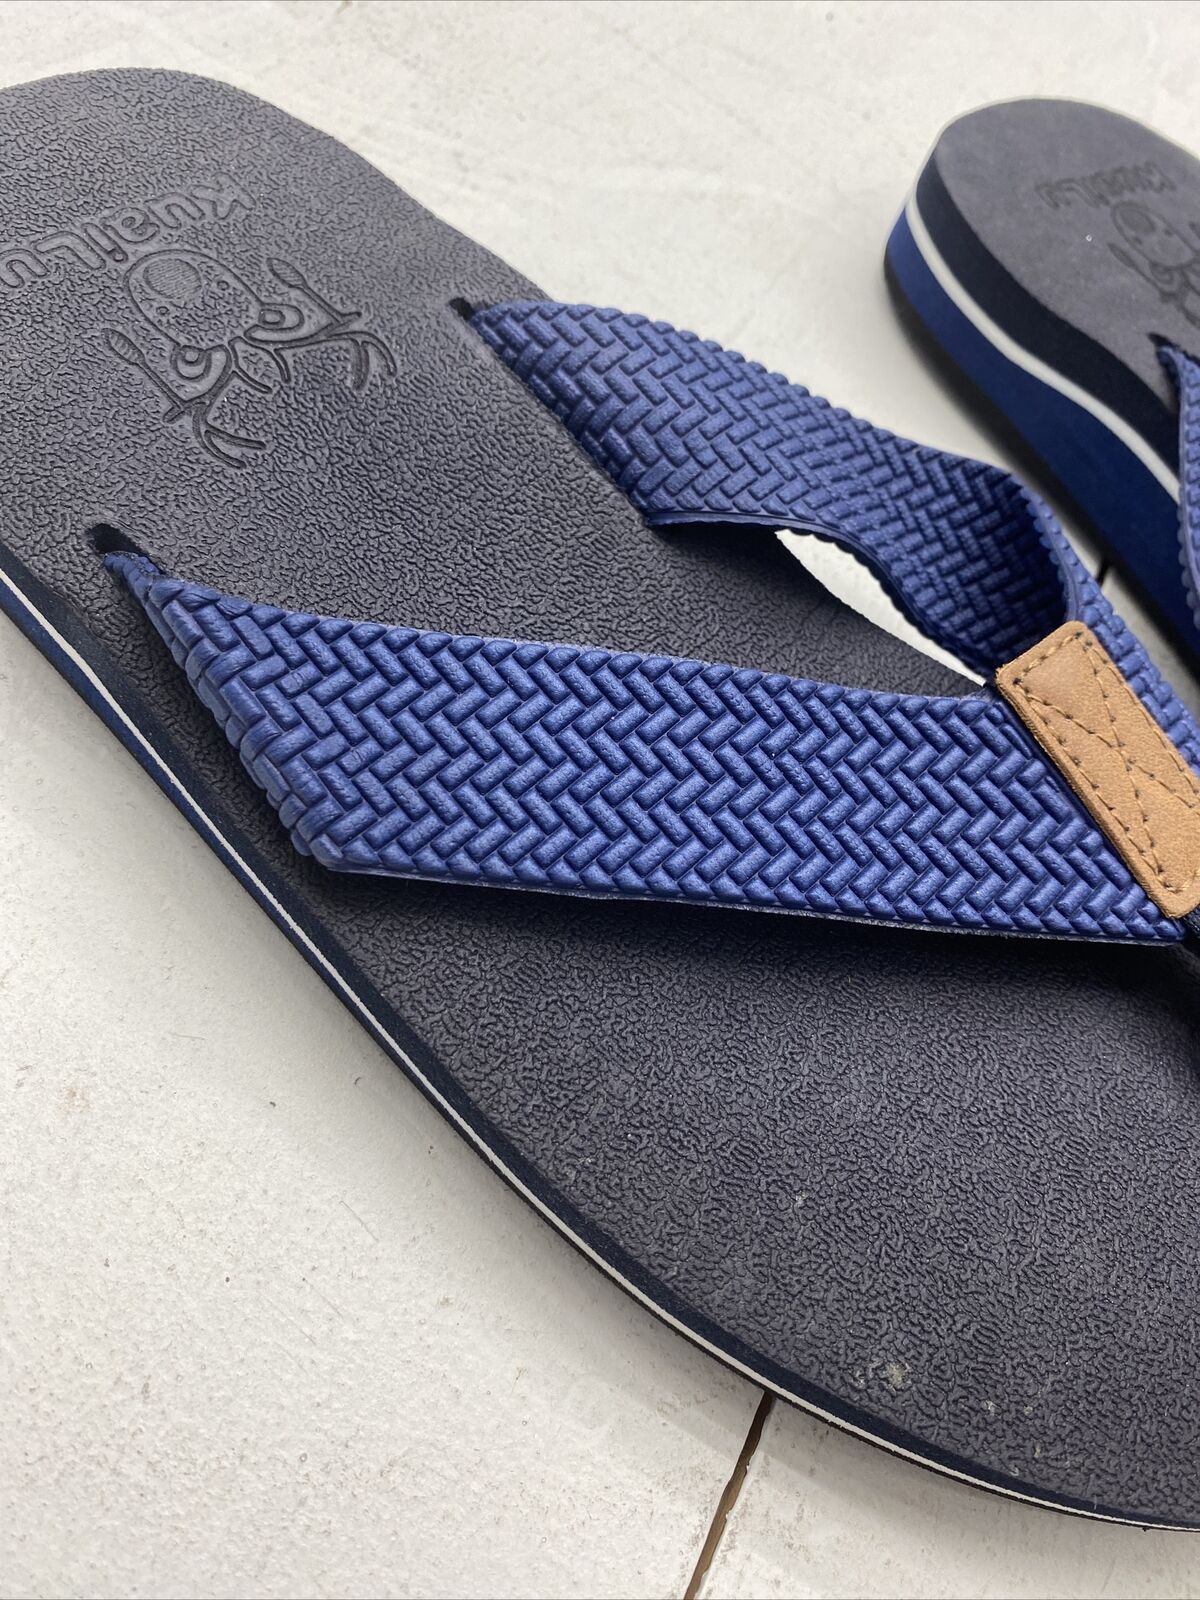  KuaiLu Men's Yoga Mat Leather Flip Flops Thong Sandals